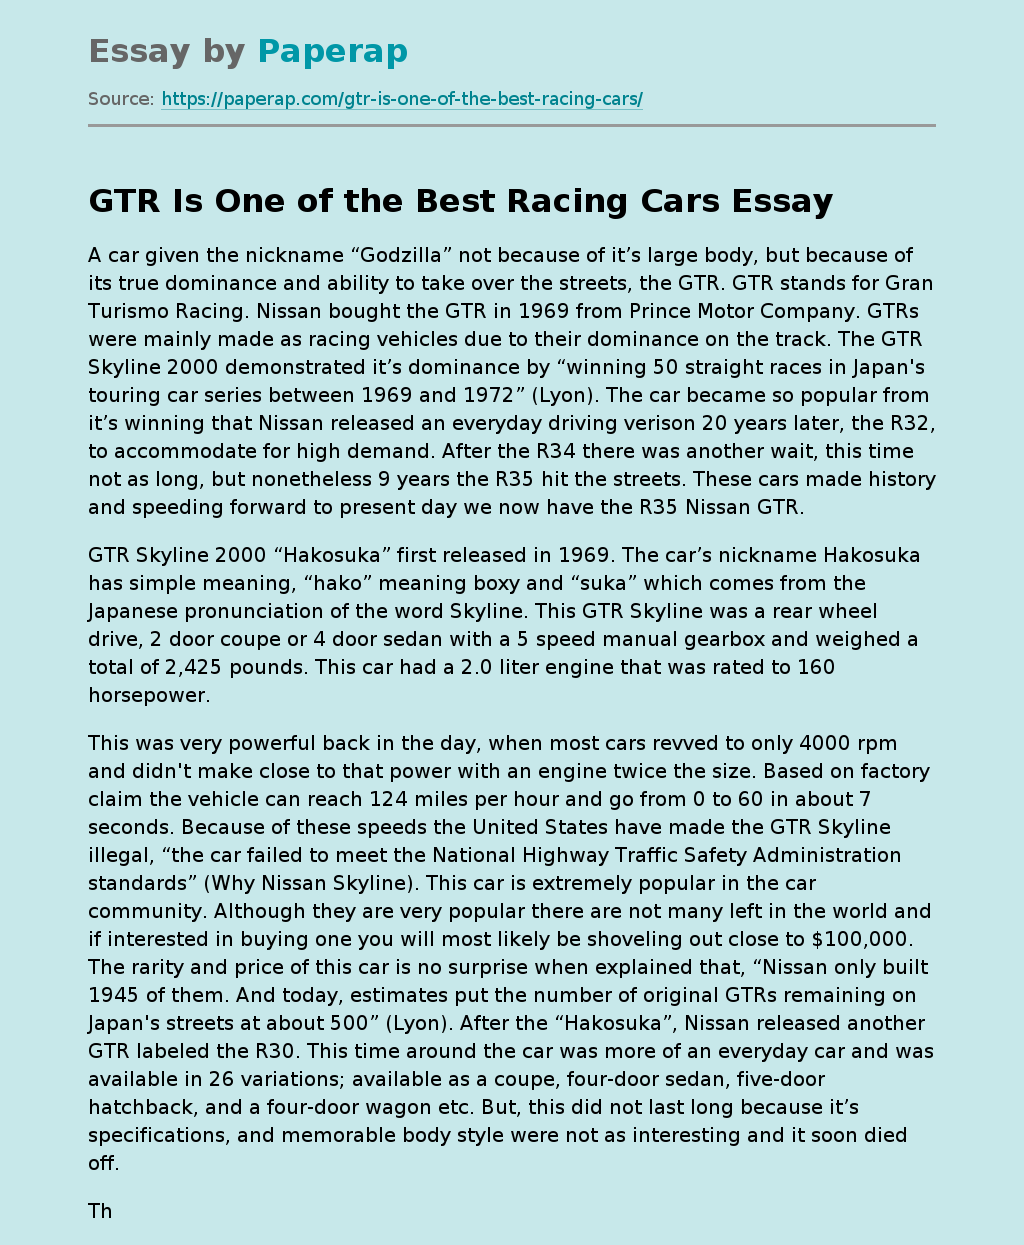 descriptive essay on car racing